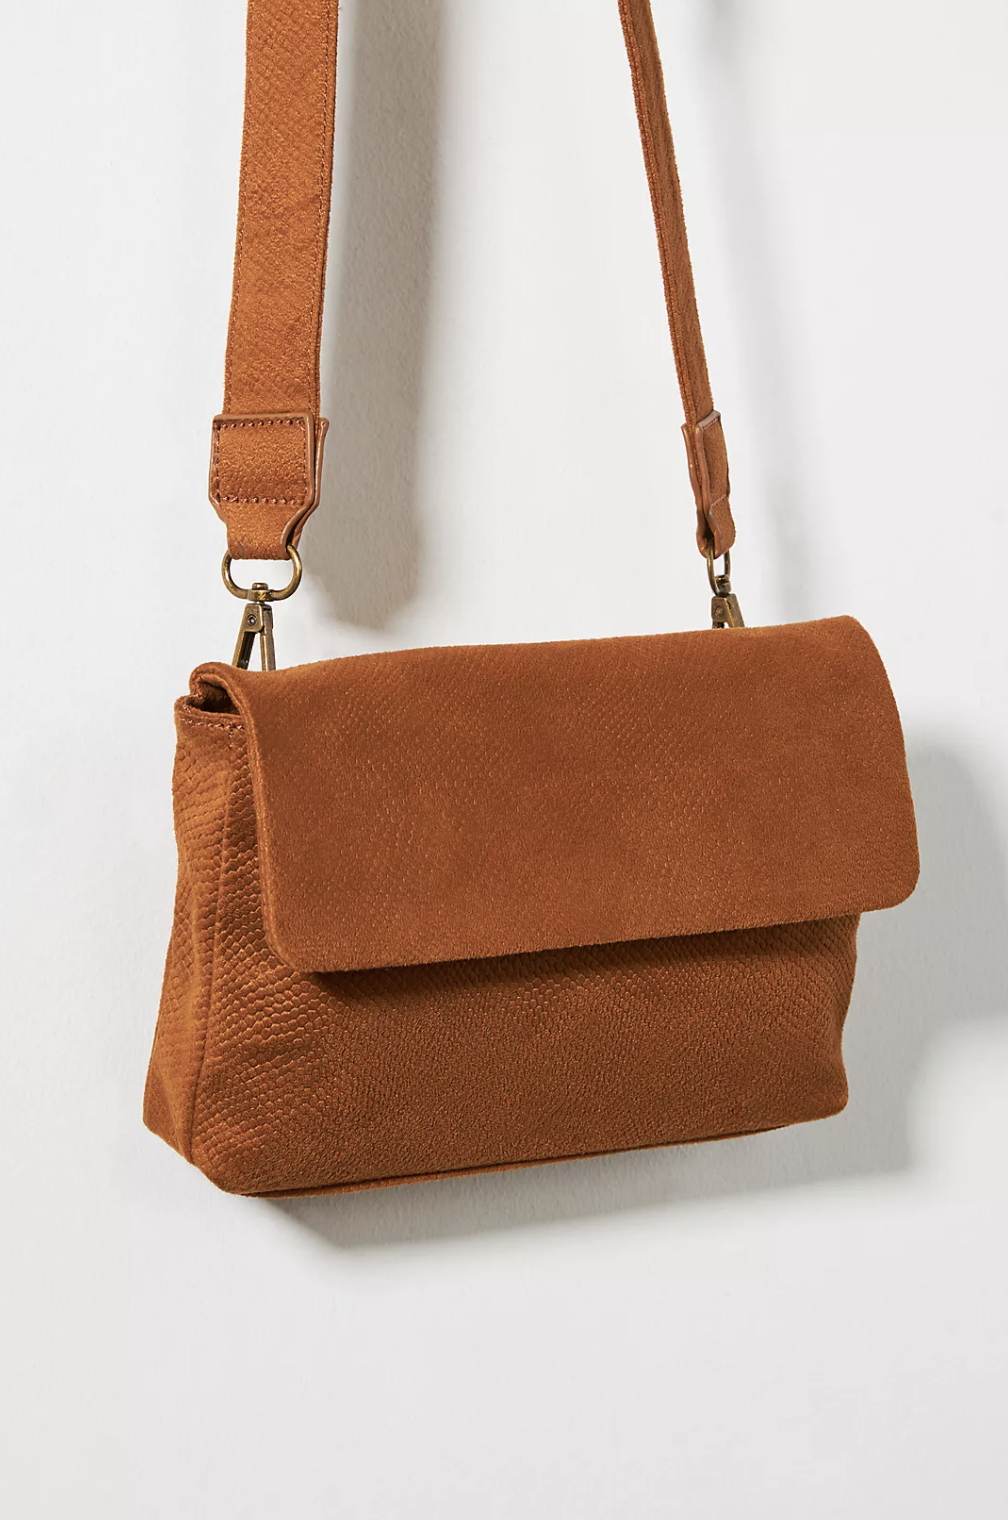 the crossbody bag in a semi-patent brown